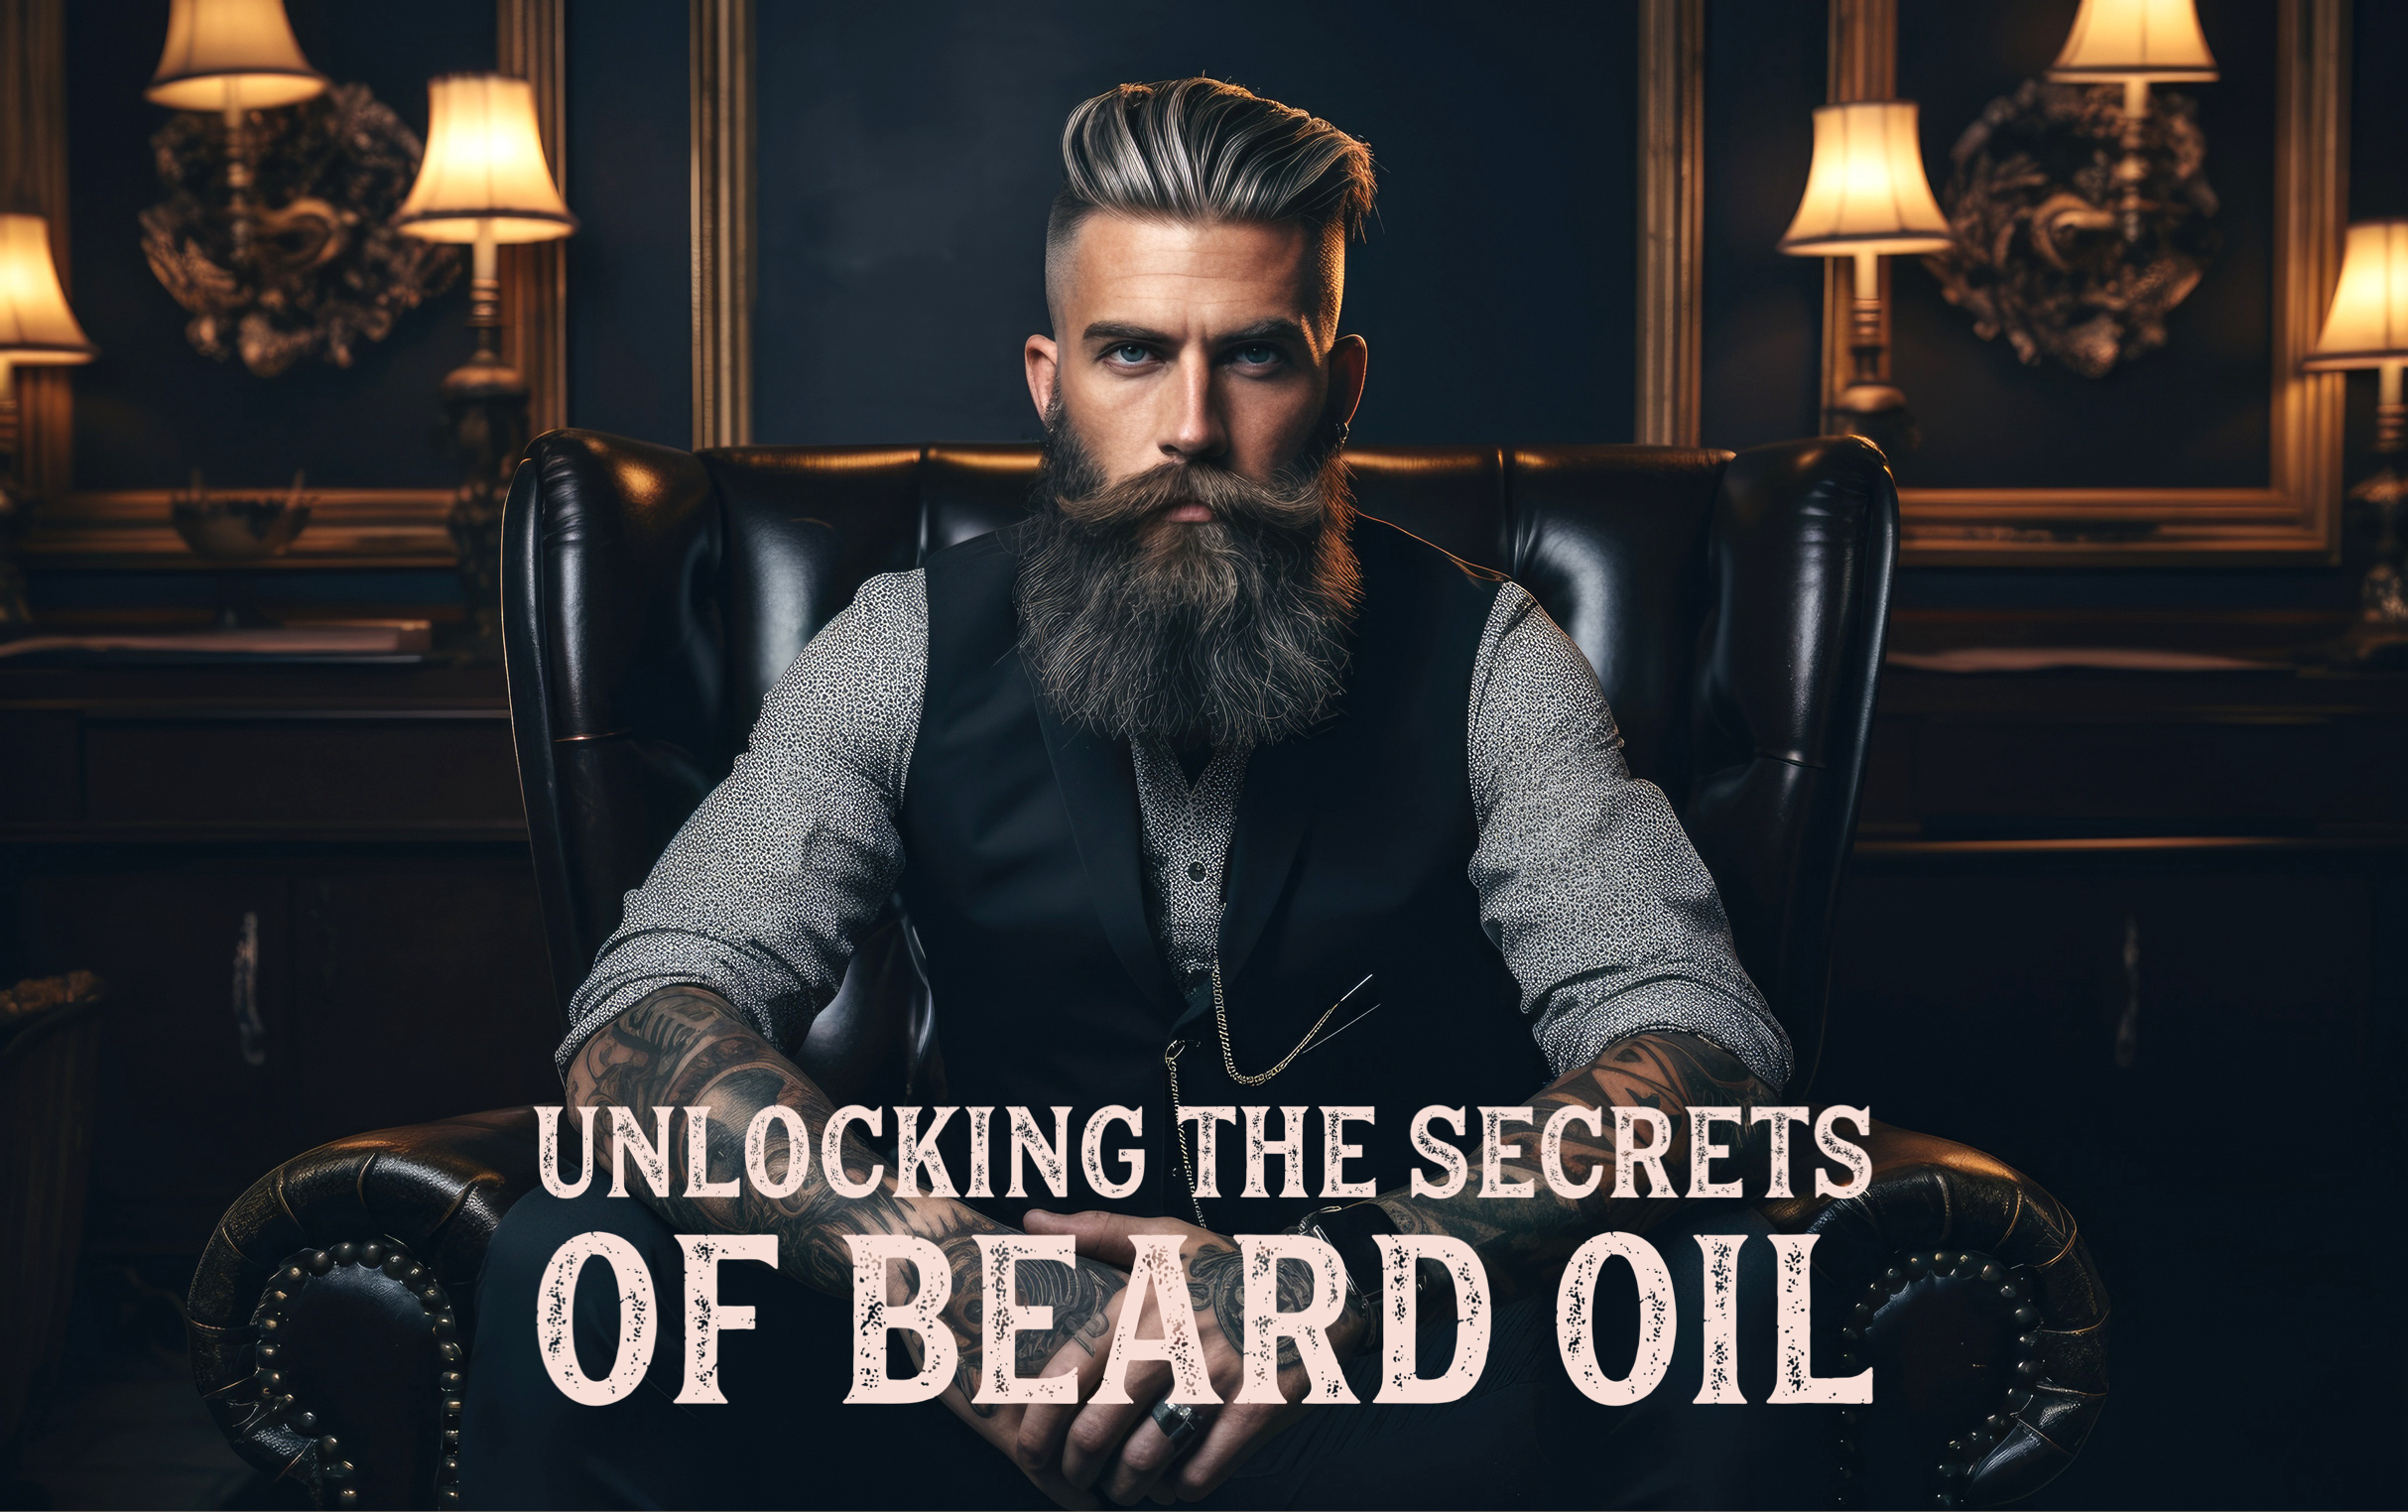 Unlock the Secrets of Beard Oil: Why Every Bearded Man Needs Captain Coop’s Beard Oils